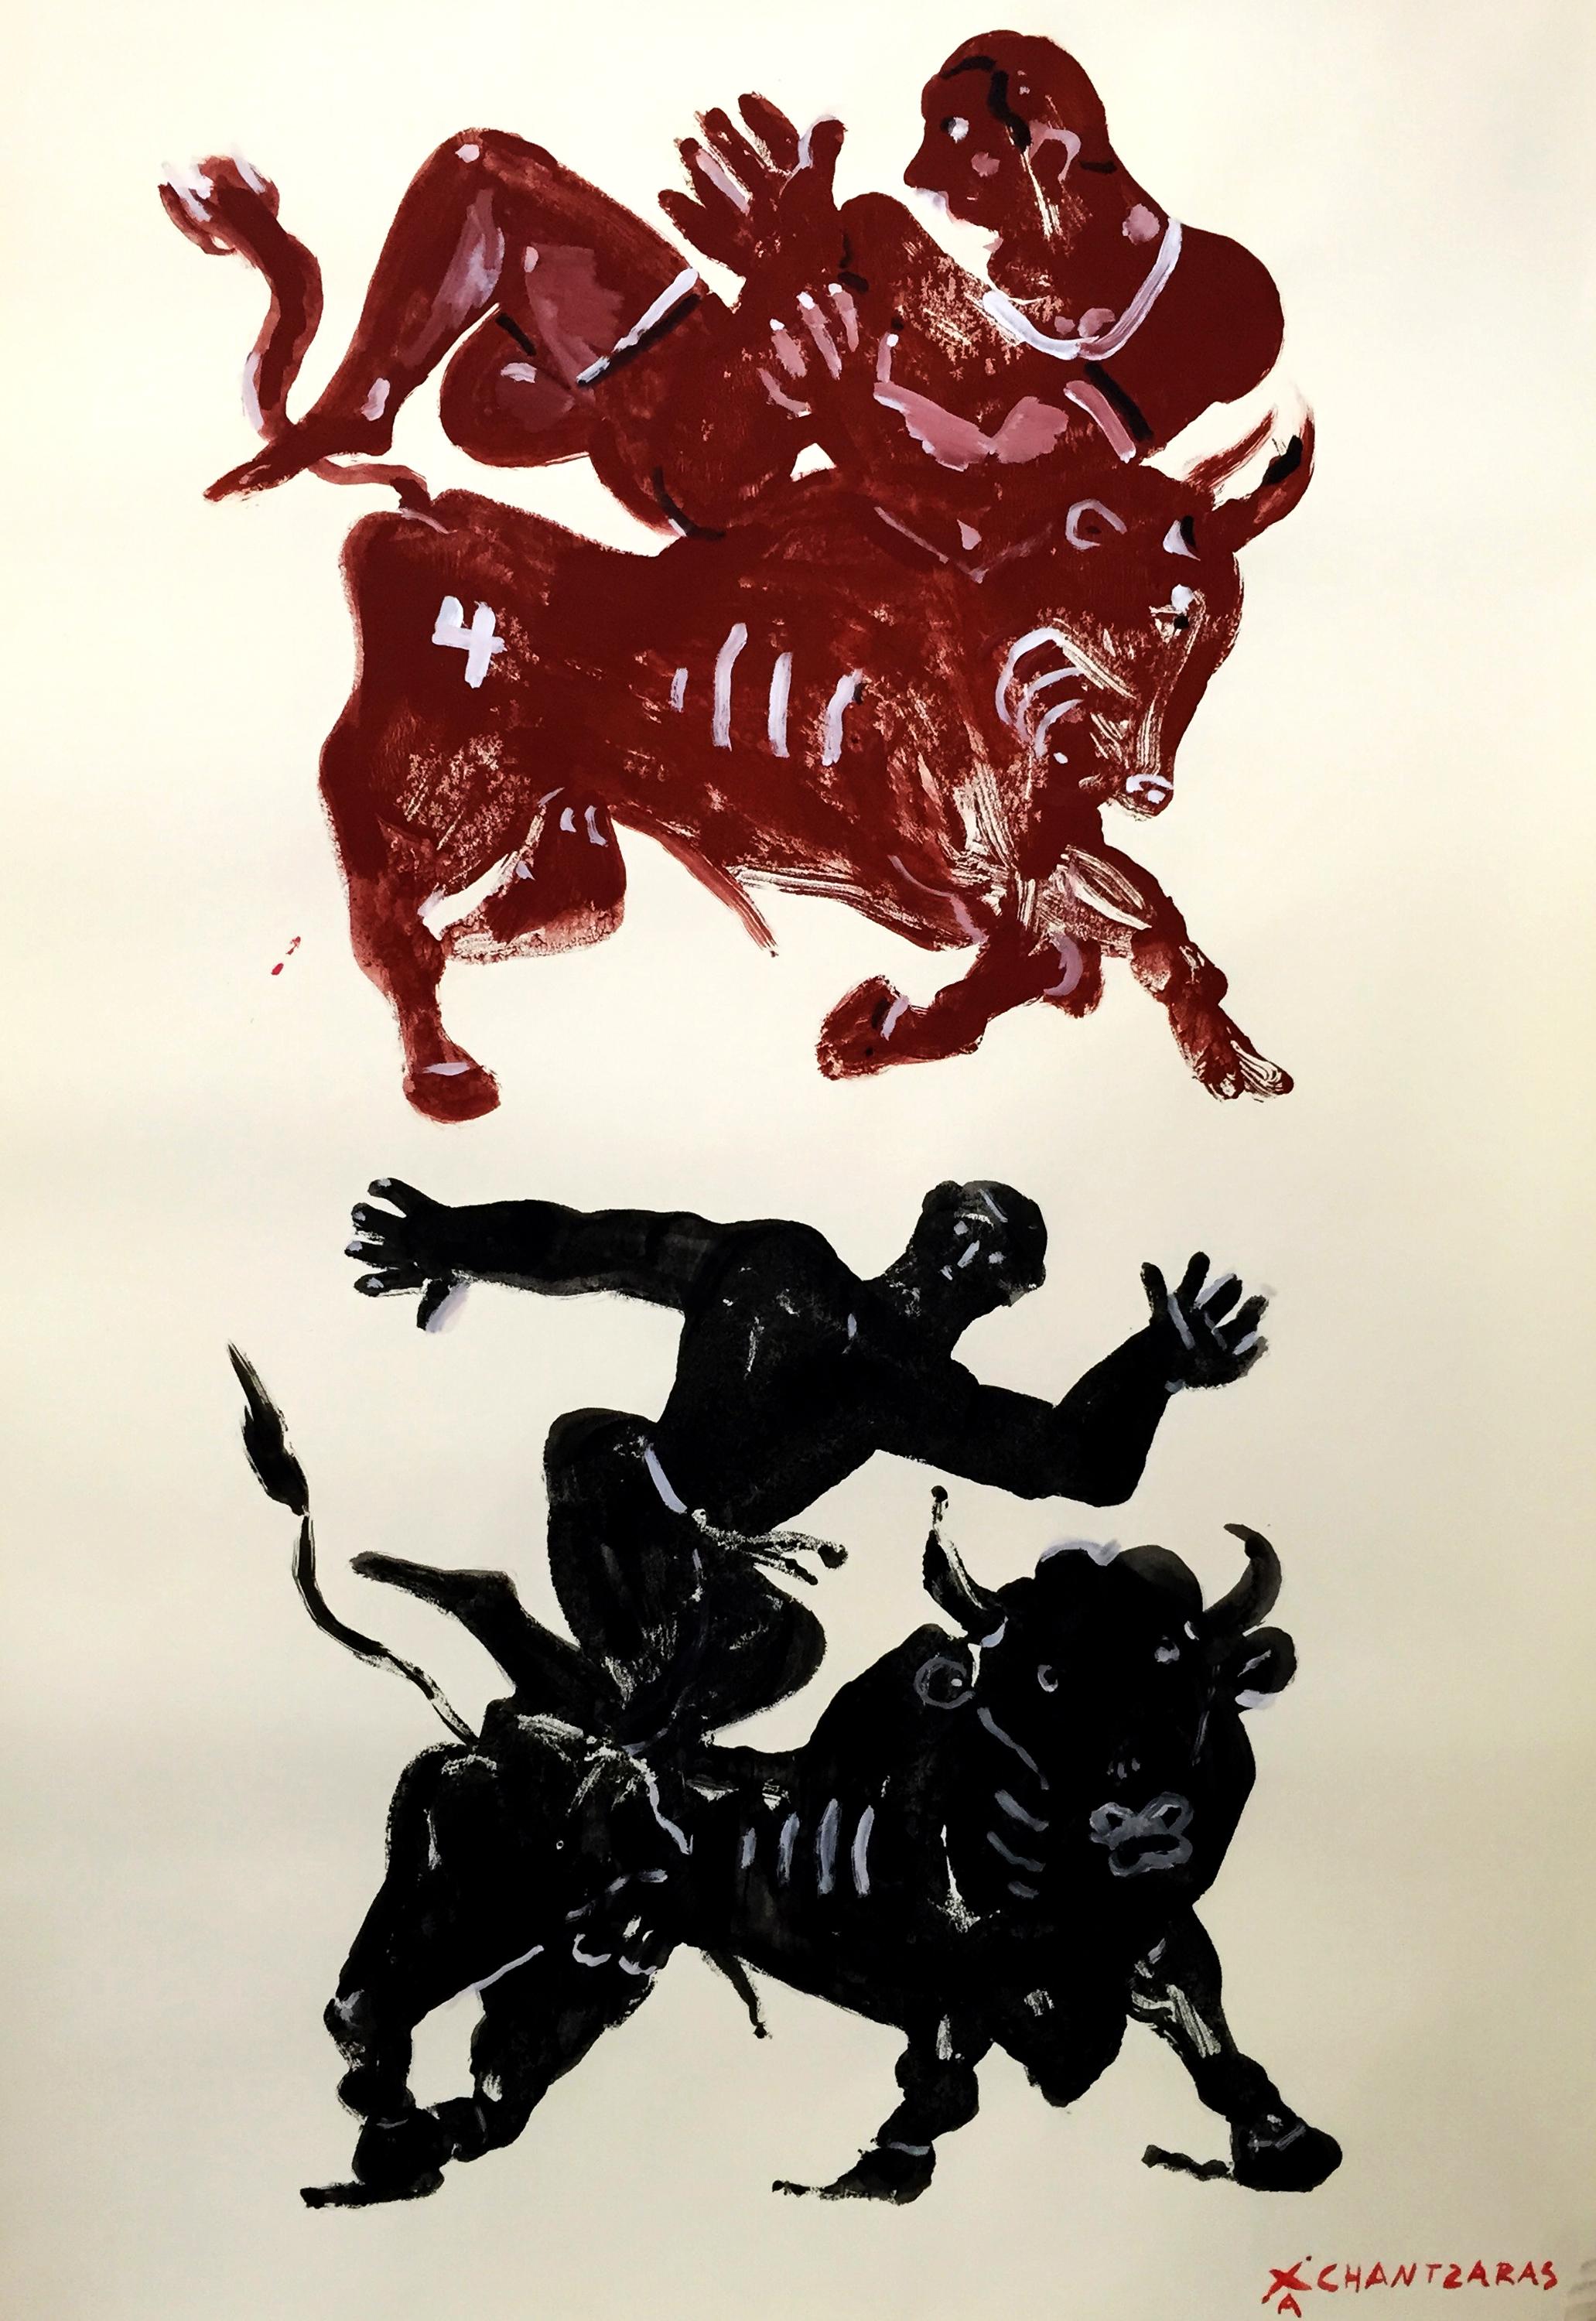 Apostolos Chantzaras Figurative Print - Myth and Games V, brown and black monoprint of ancient style figures and bulls